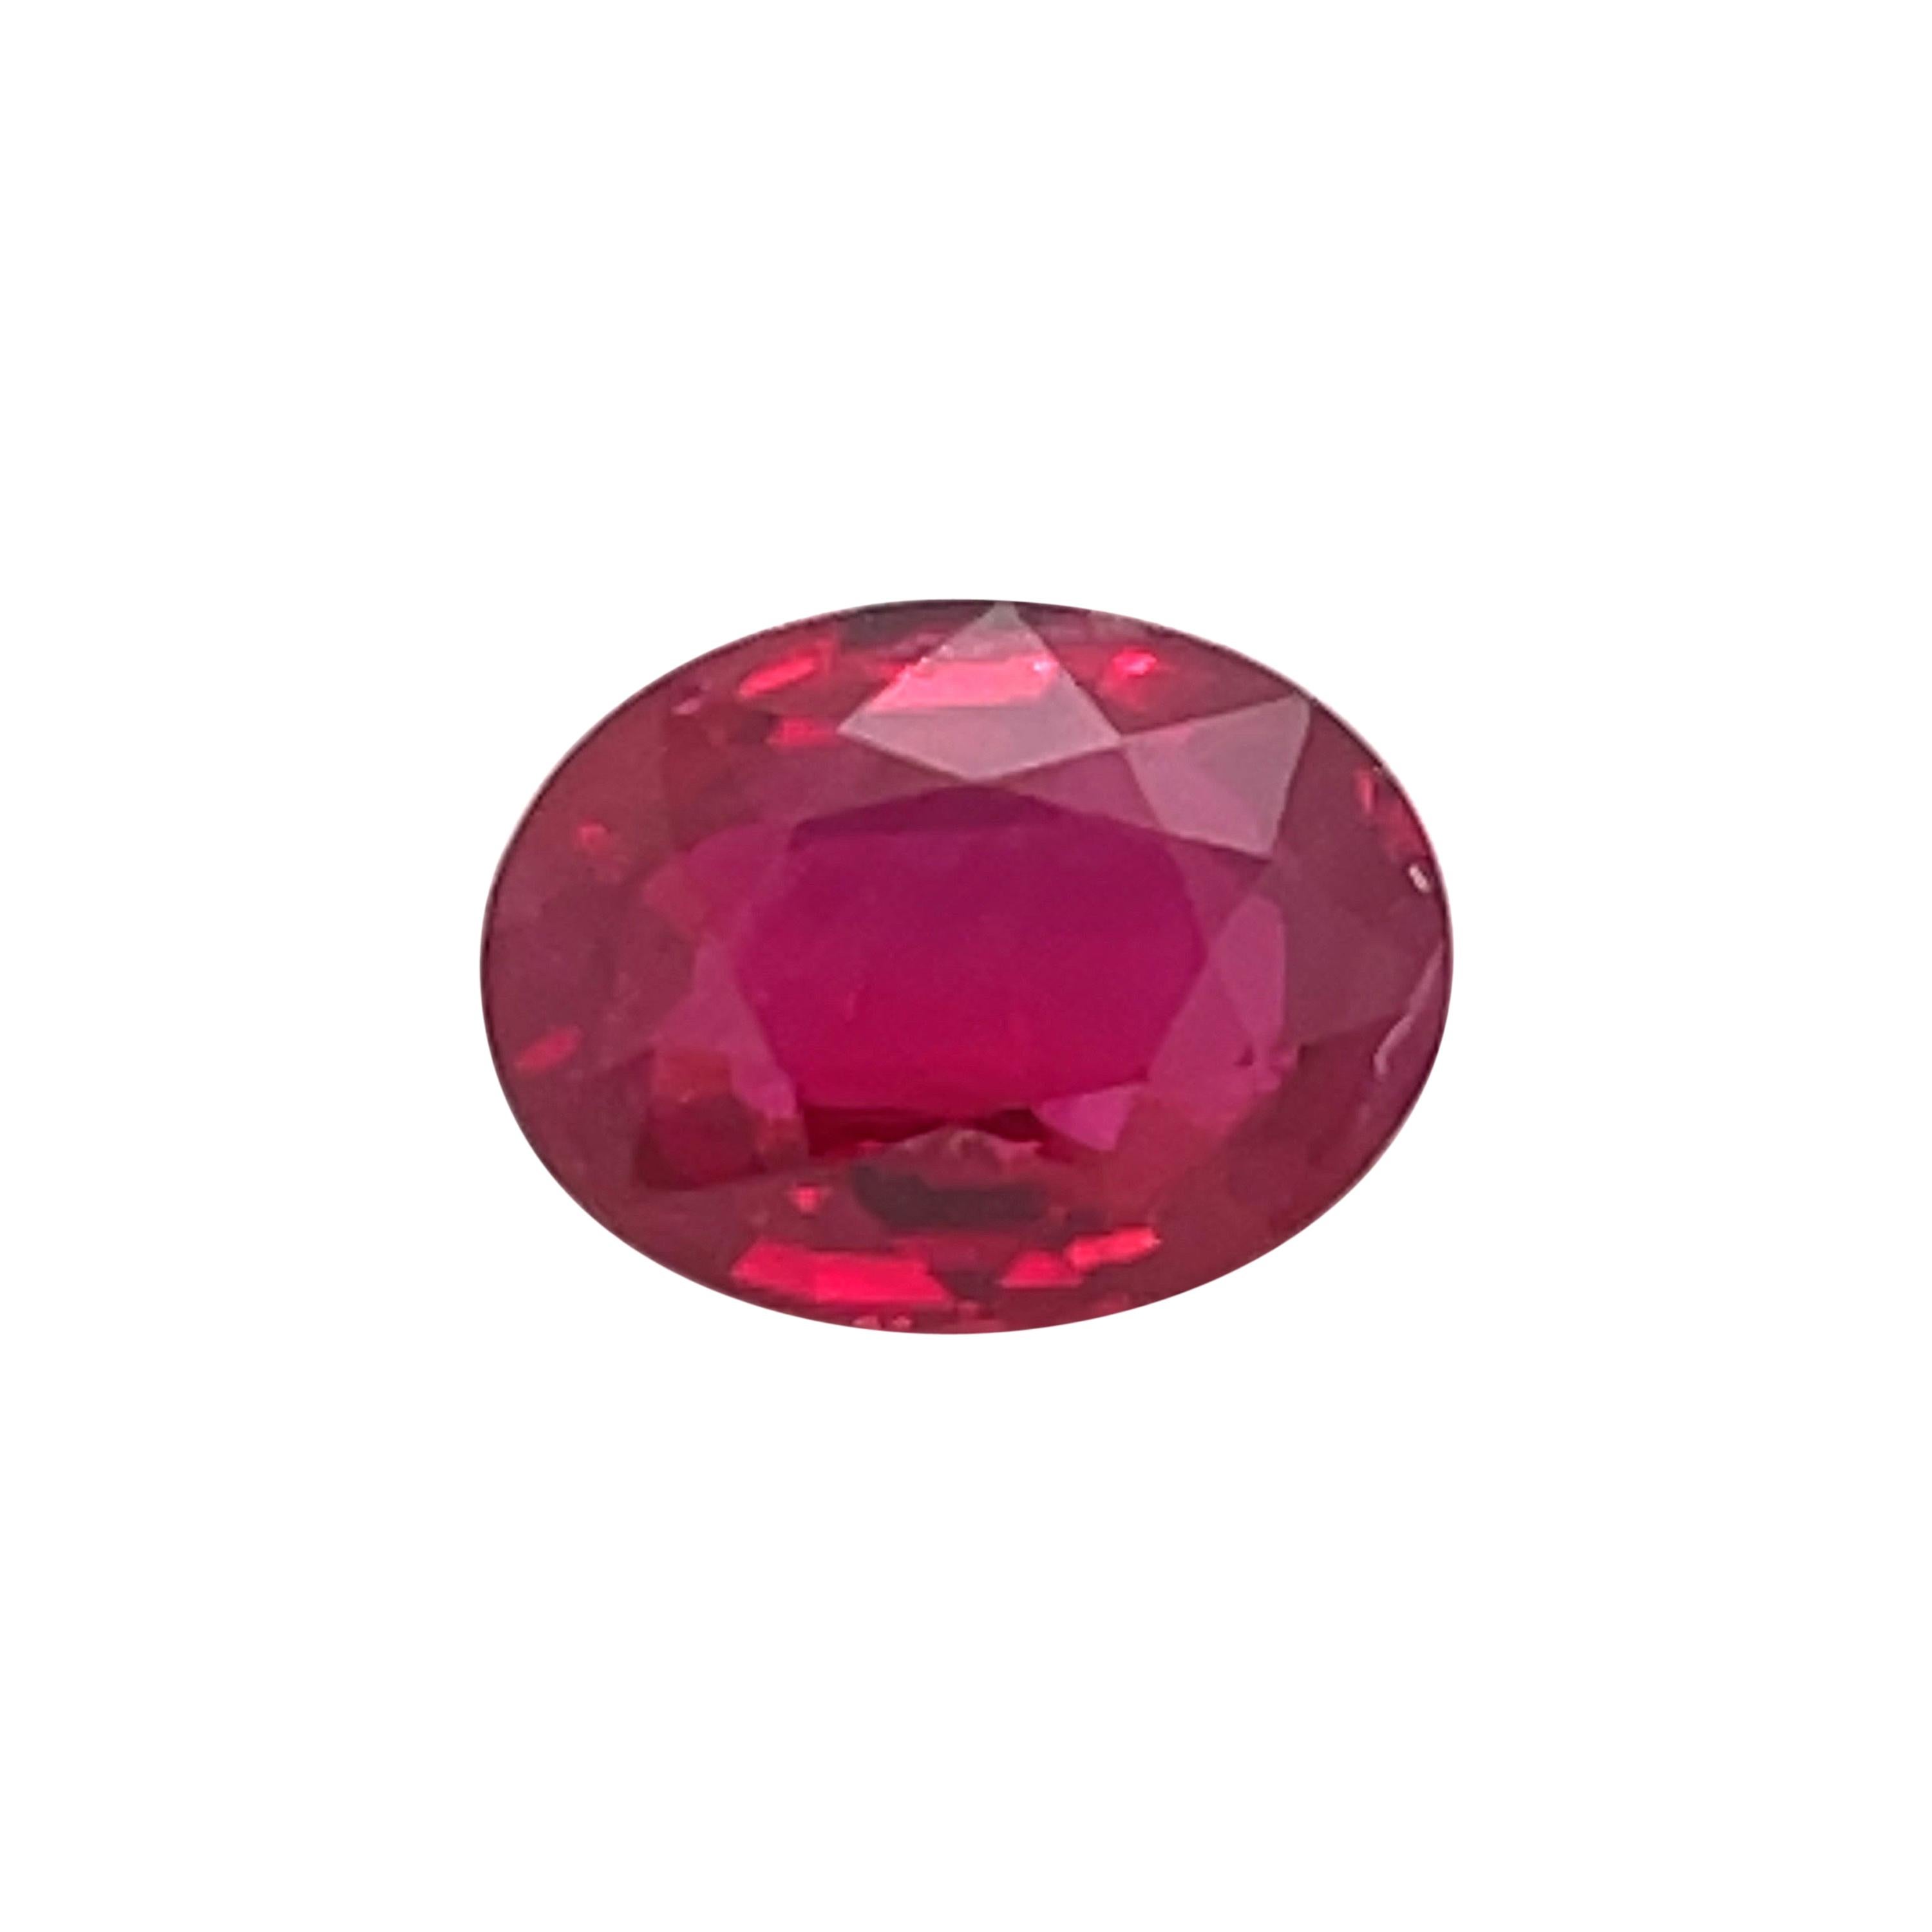 0.16 Cts Natural Burma Ruby Loose Gemstone Oval Cut